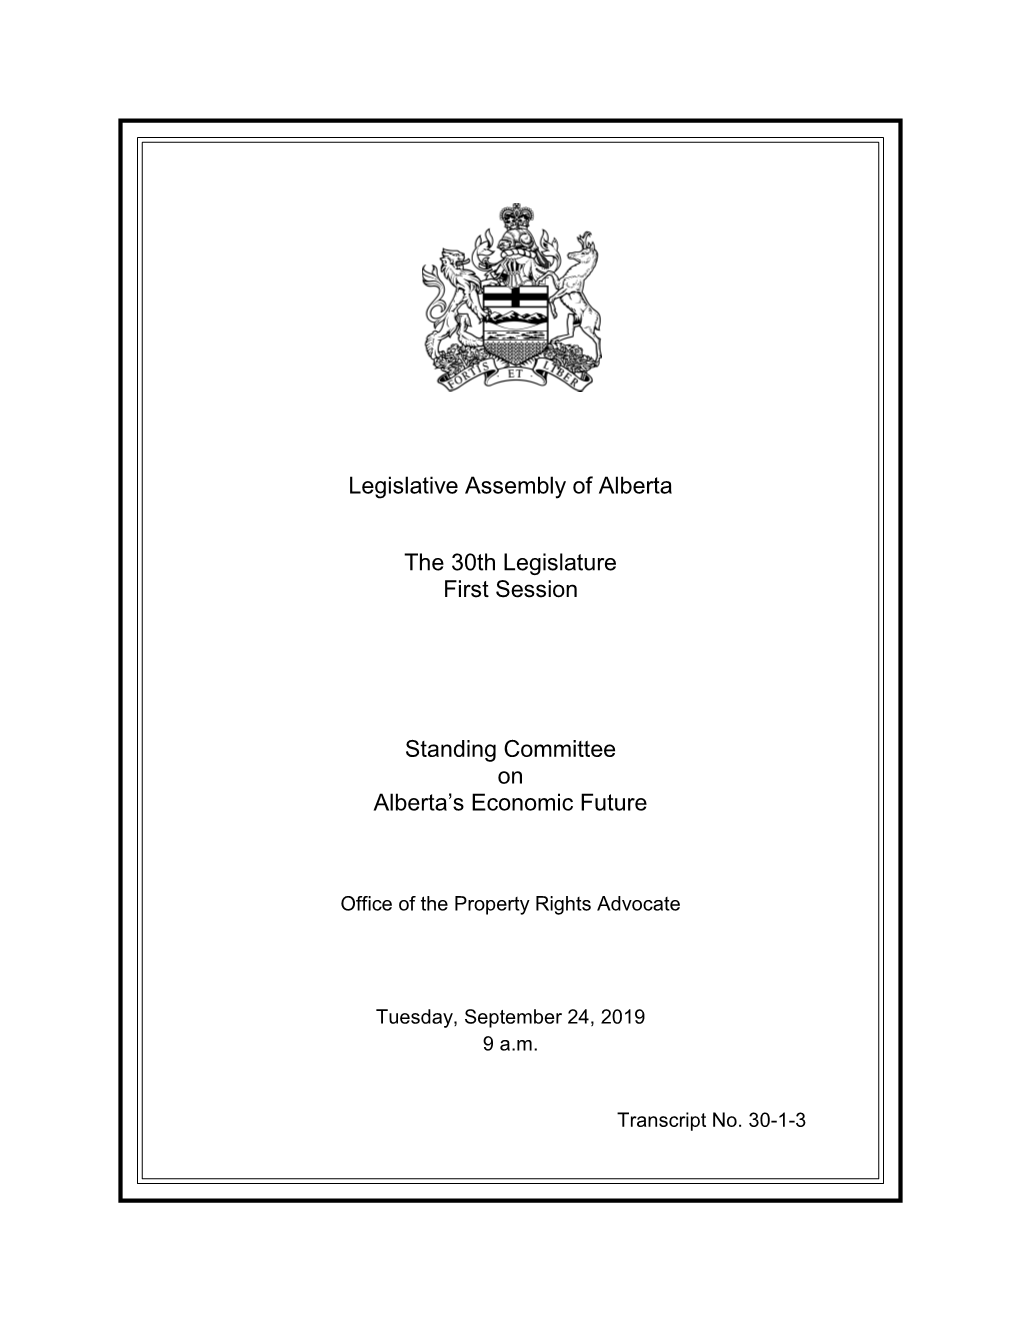 Legislative Assembly of Alberta the 30Th Legislature First Session Standing Committee on Alberta's Economic Future